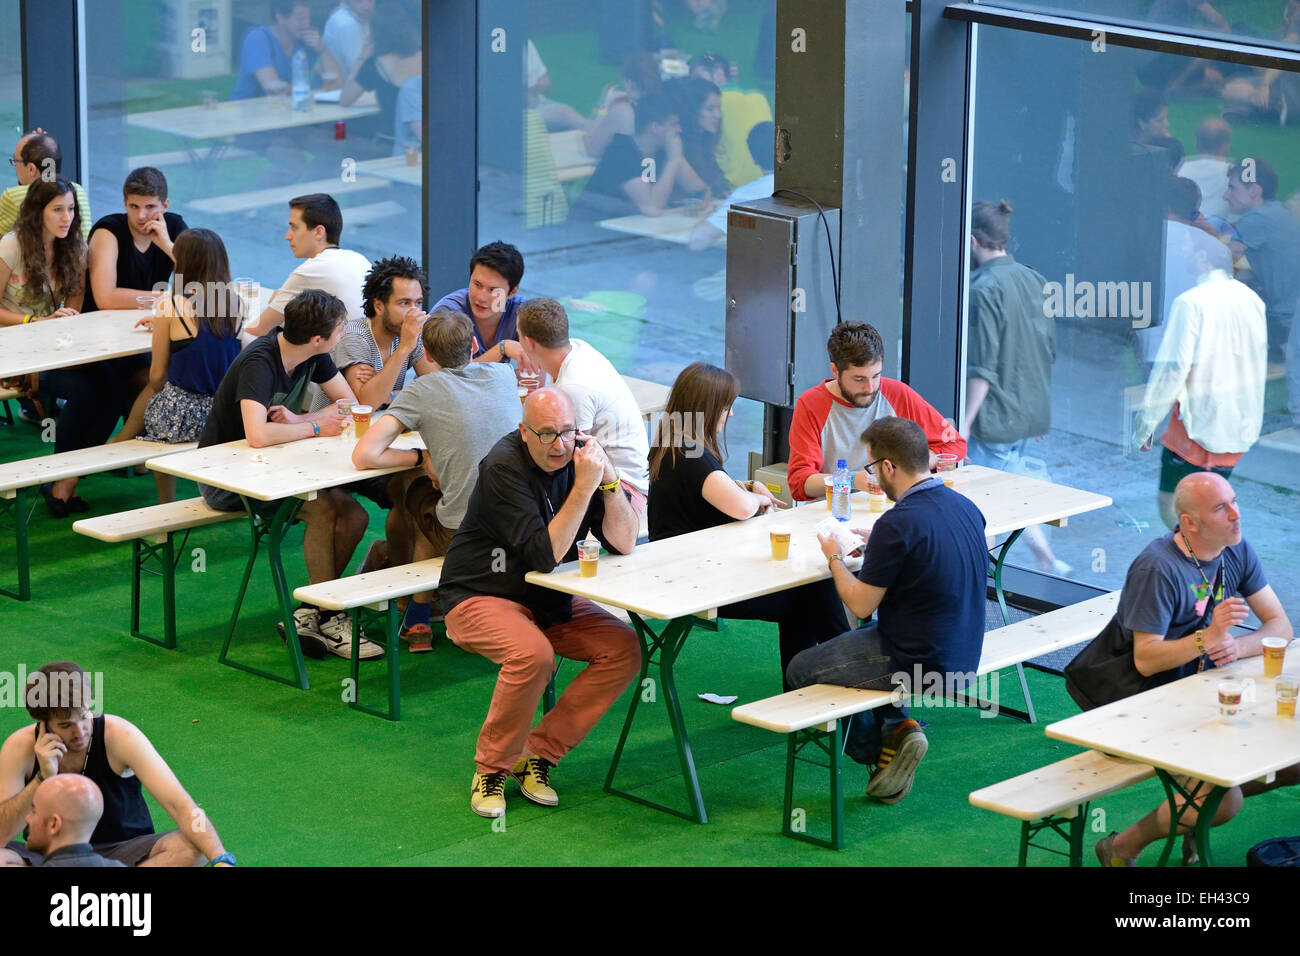 BARCELONA - JUN 14: People at the restaurant bar at Sonar Festival on June 14, 2014 in Barcelona, Spain. Stock Photo